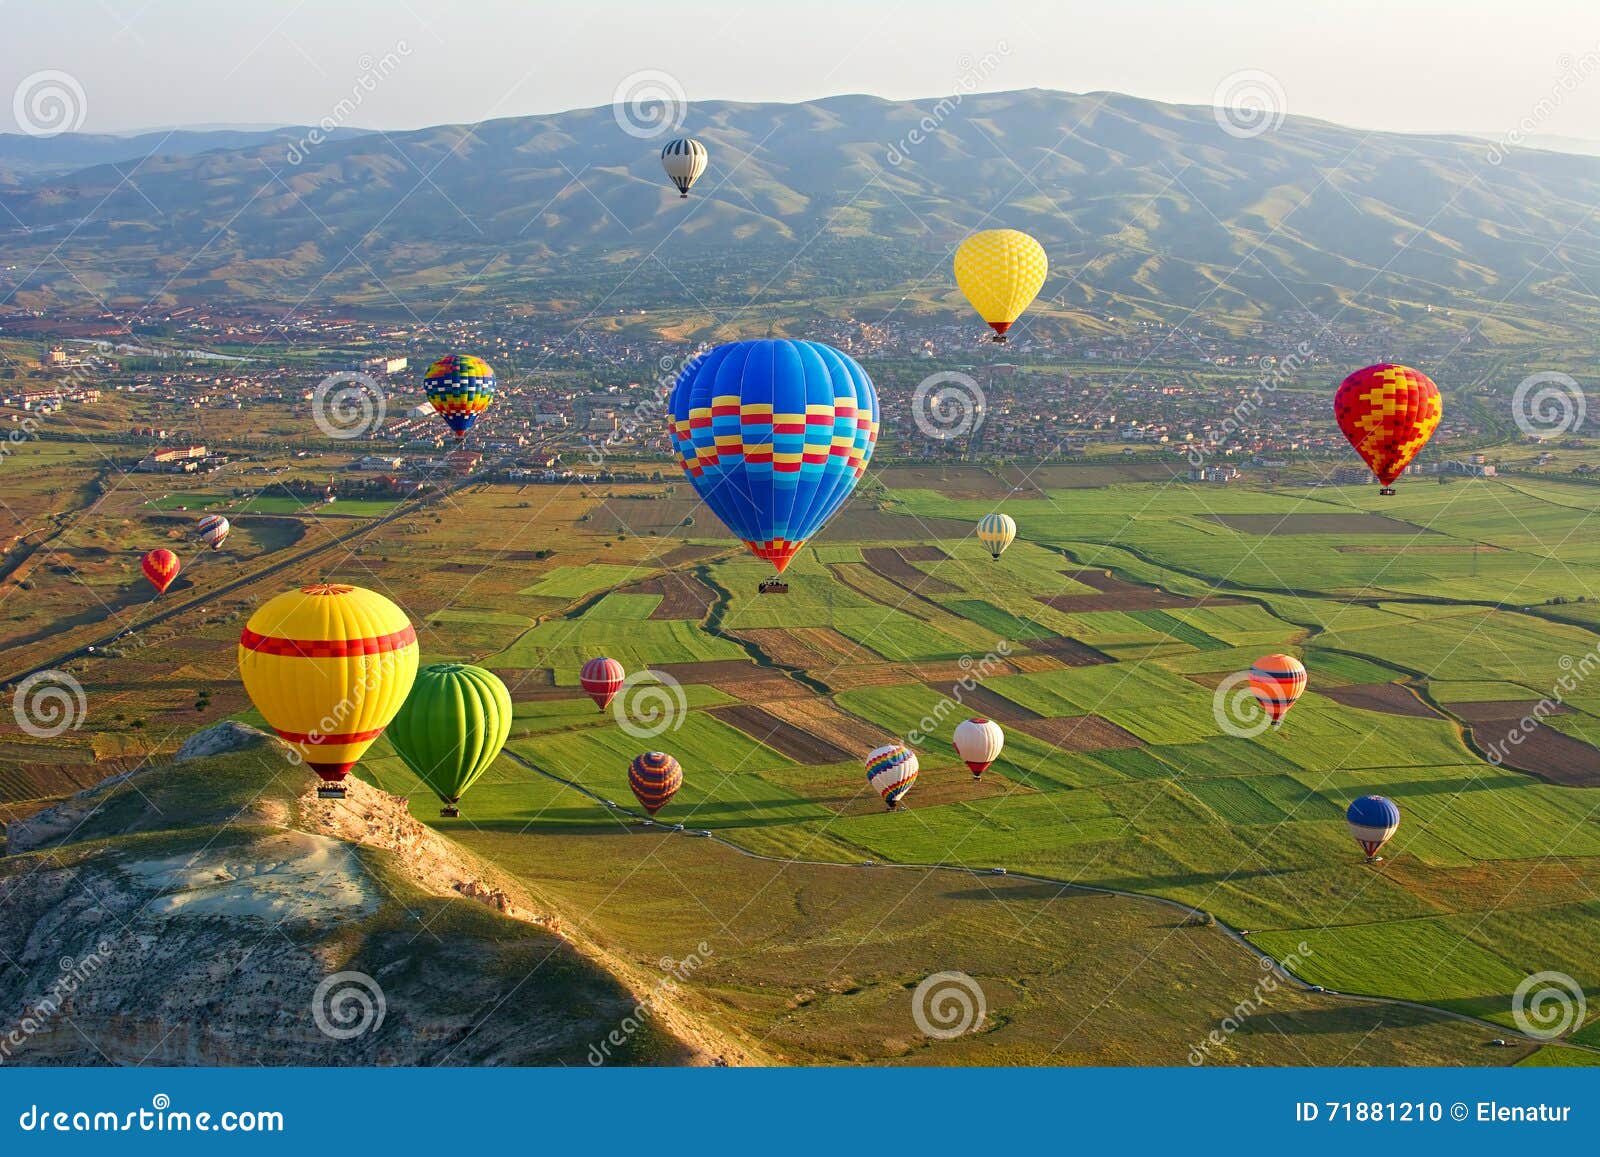 cappadocia. colorful hot air balloons flying, cappadocia, anatolia, turkey